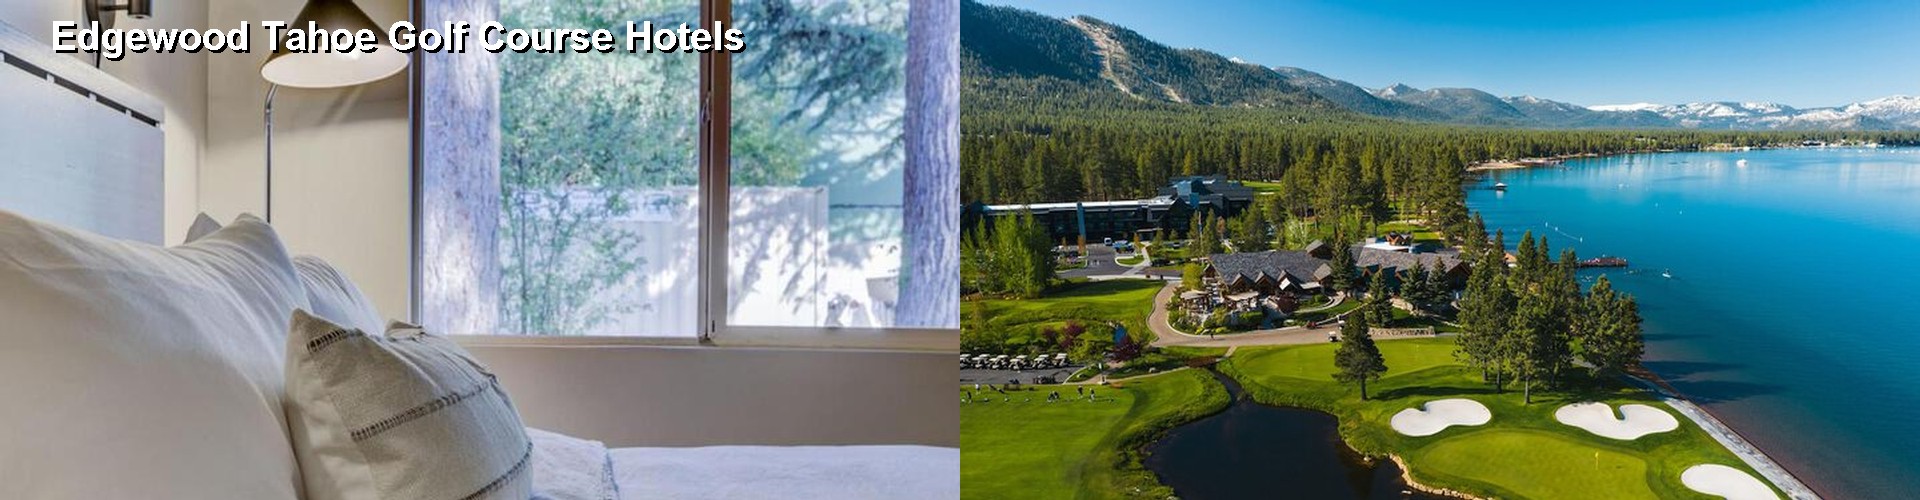 4 Best Hotels near Edgewood Tahoe Golf Course